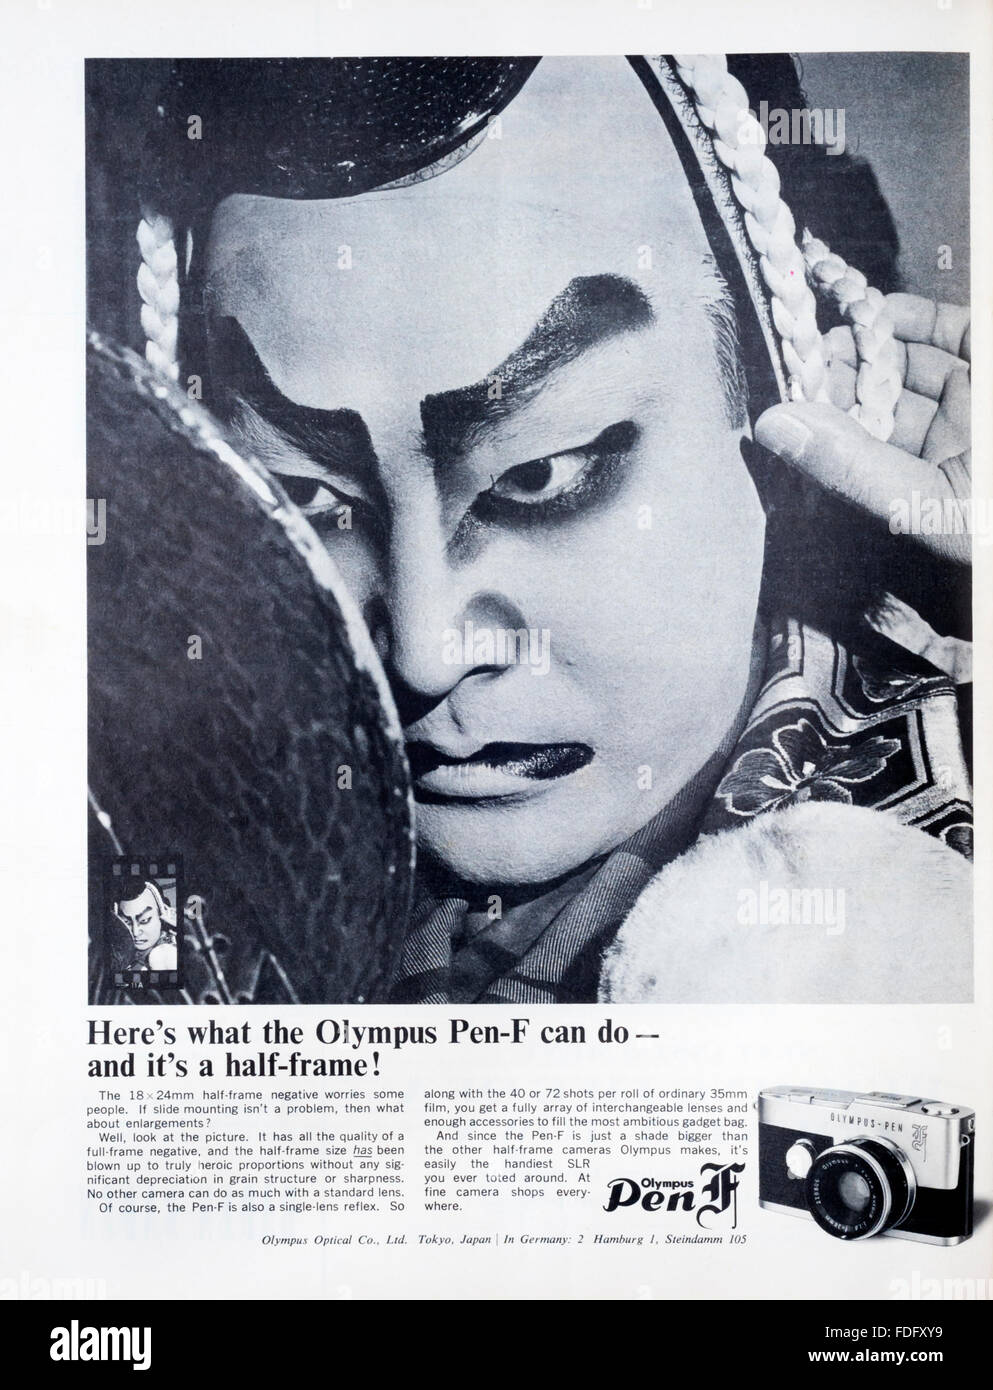 1960s magazine advertisement advertising the Olympus Pen F half-frame camera.. Stock Photo